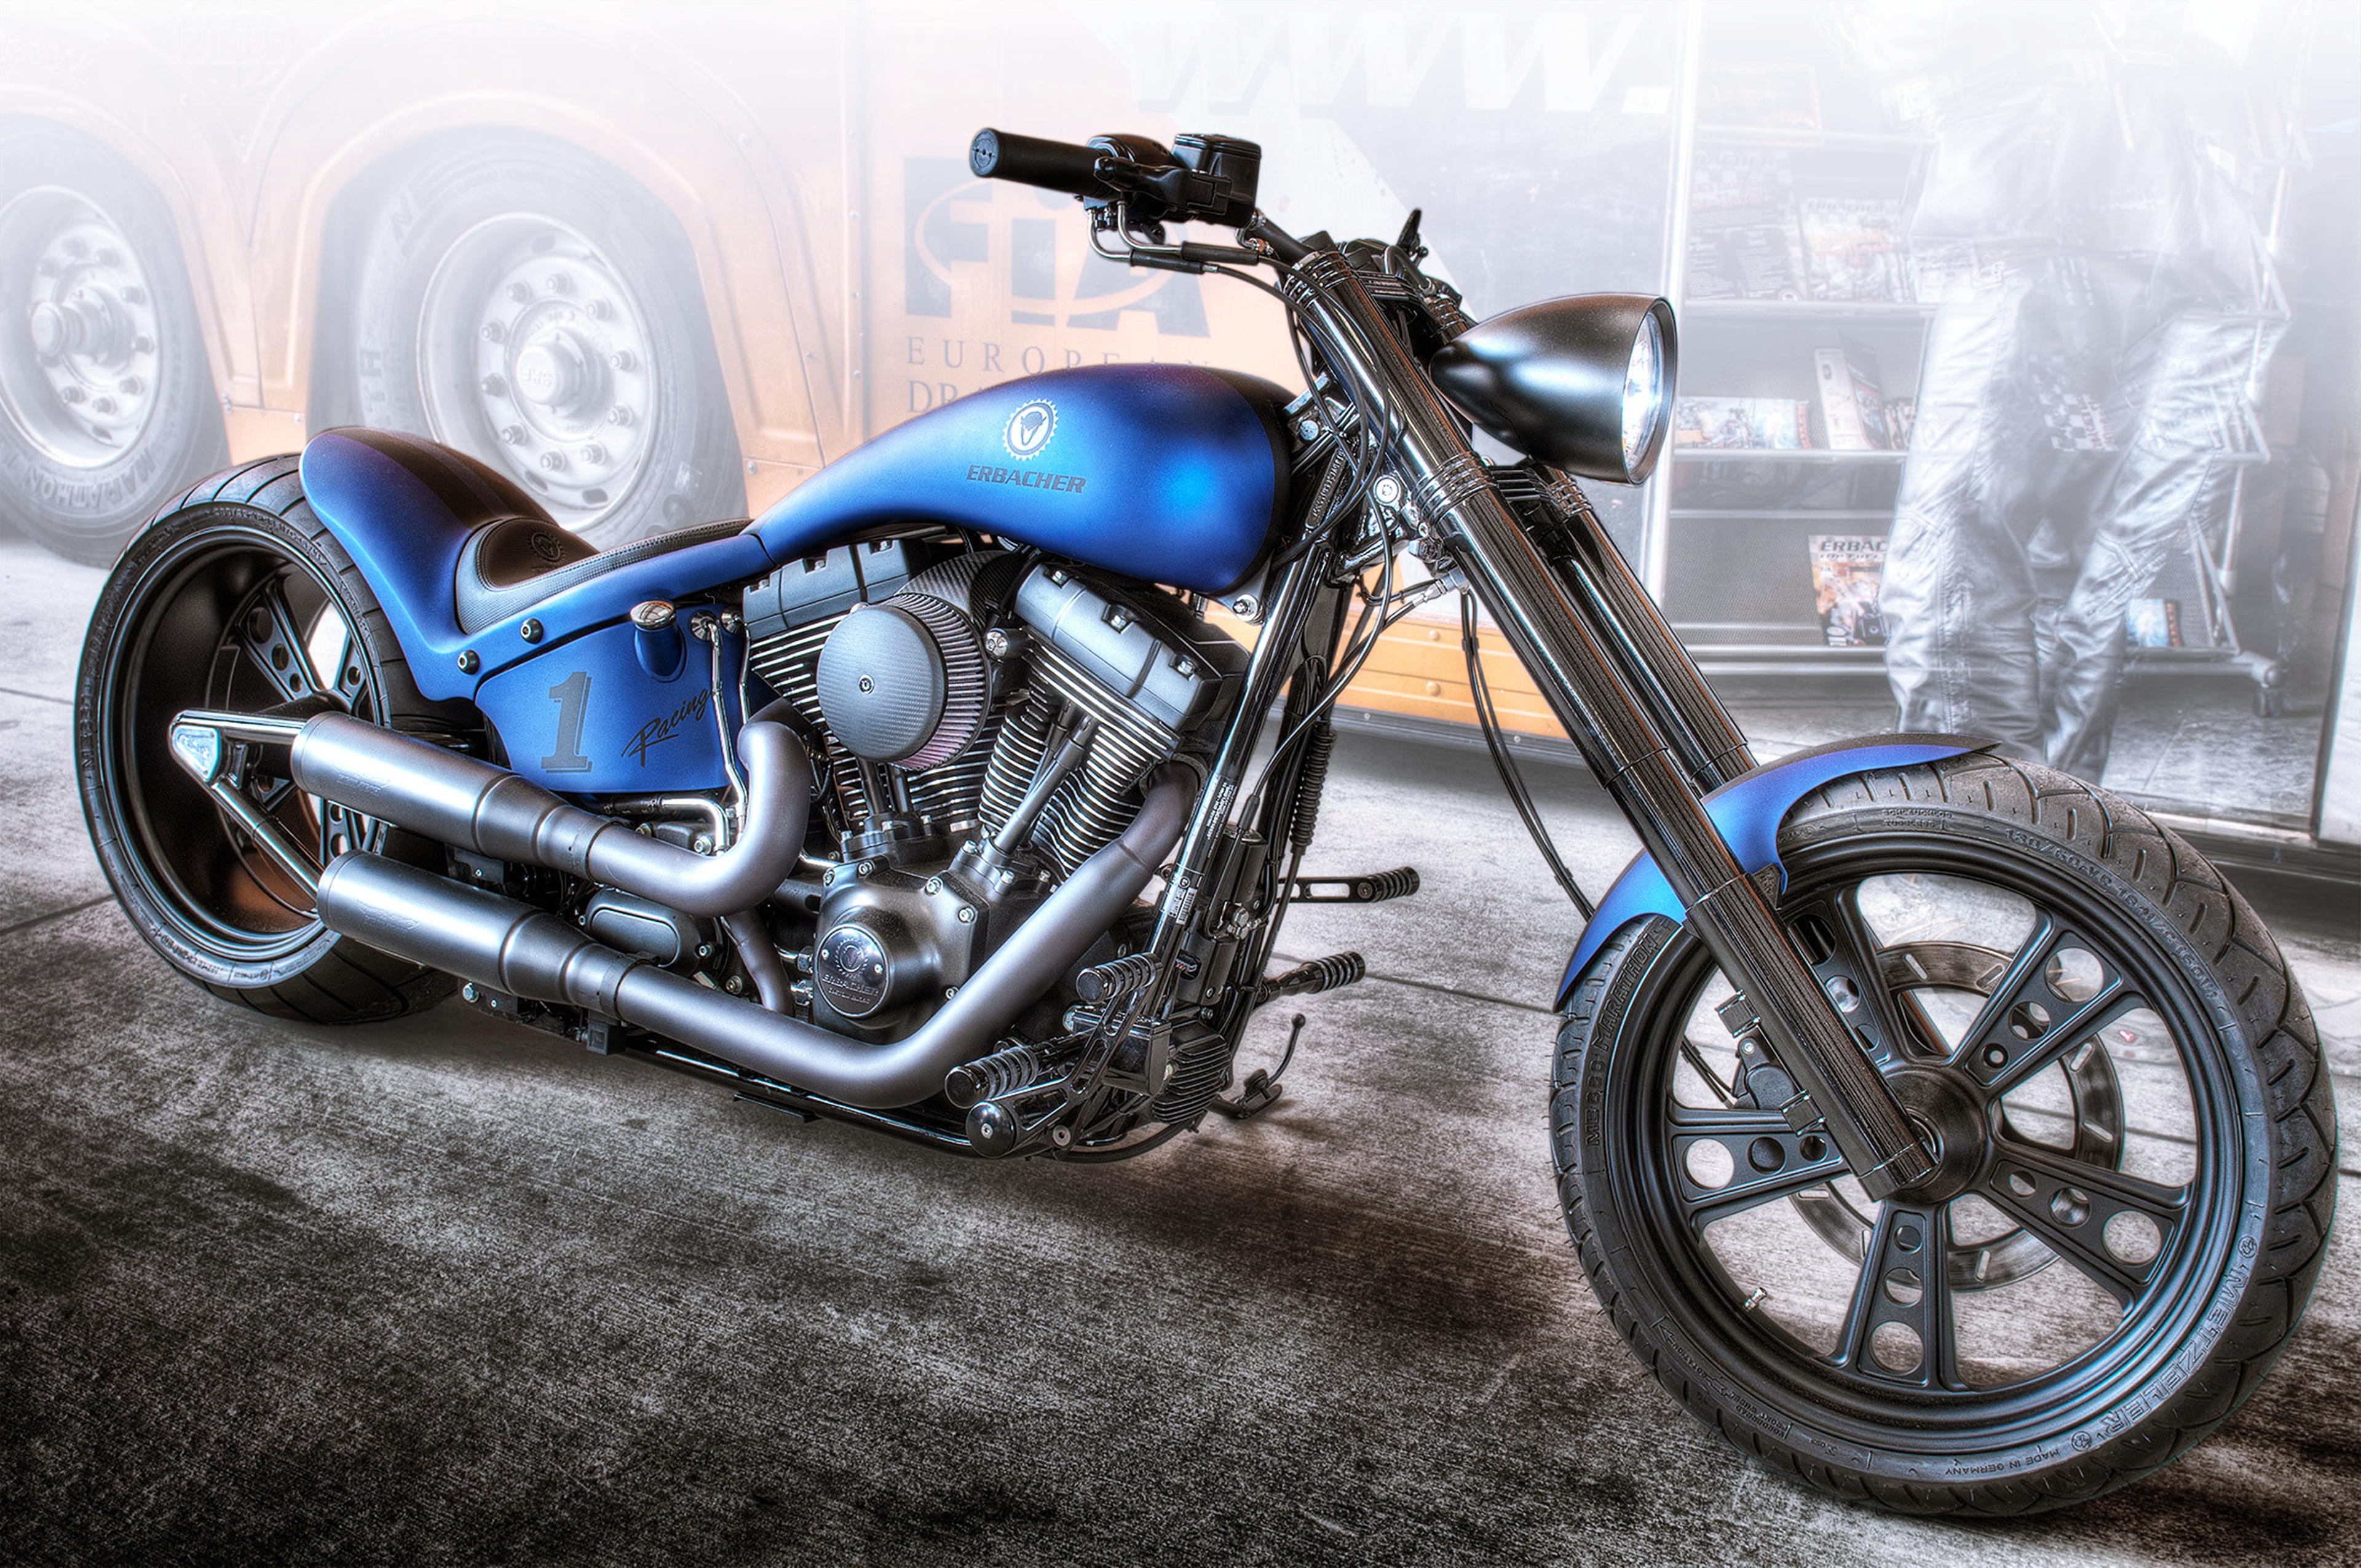 2016 Harley Davidson HD Bikes 4k Wallpapers Images Backgrounds 